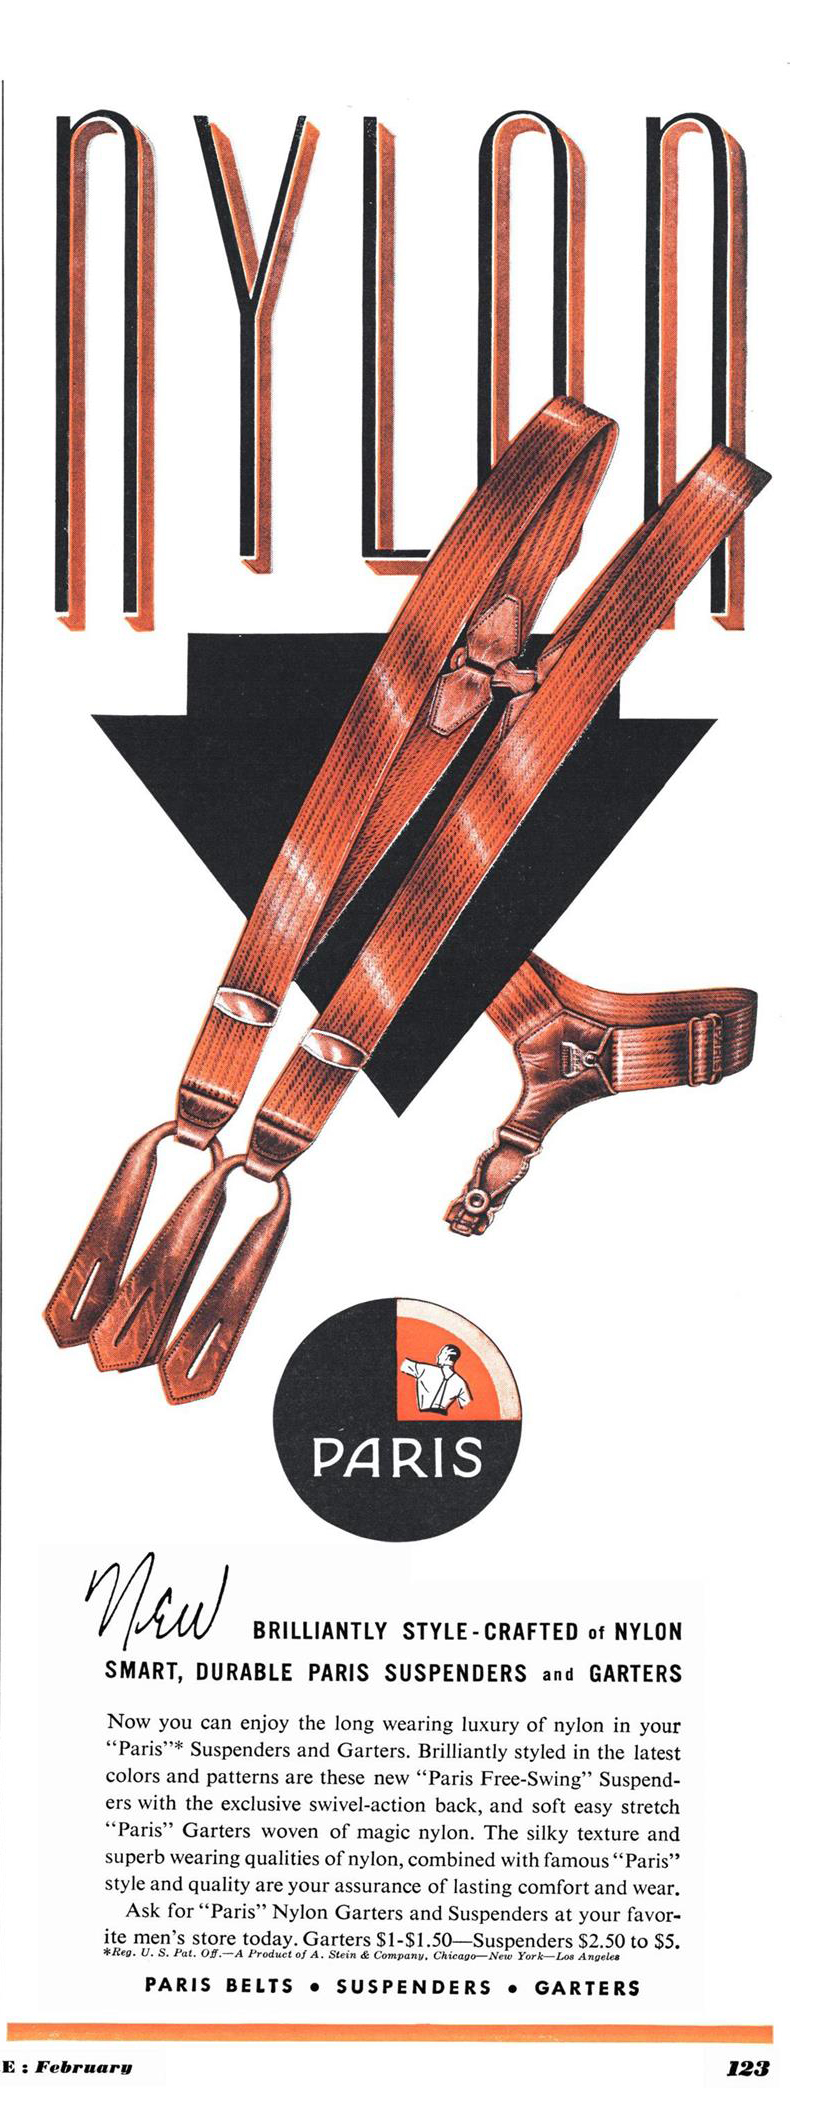 Esquire, 1 февраля 1950 года. Реклама подтяжек для носков Paris от A. Stein & Company